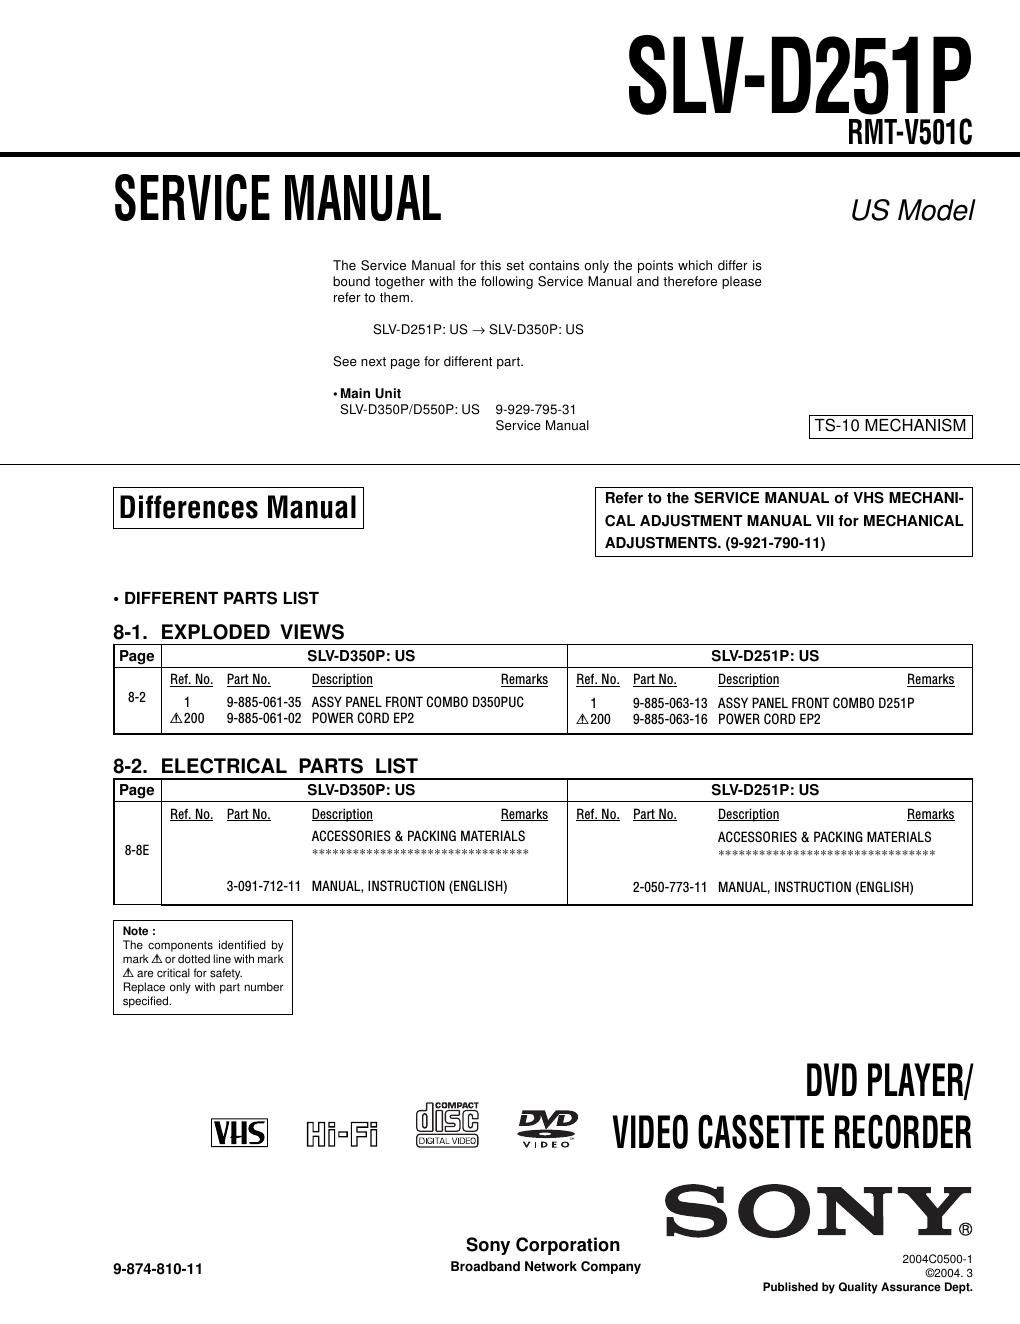 sony slv d 251 p service manual